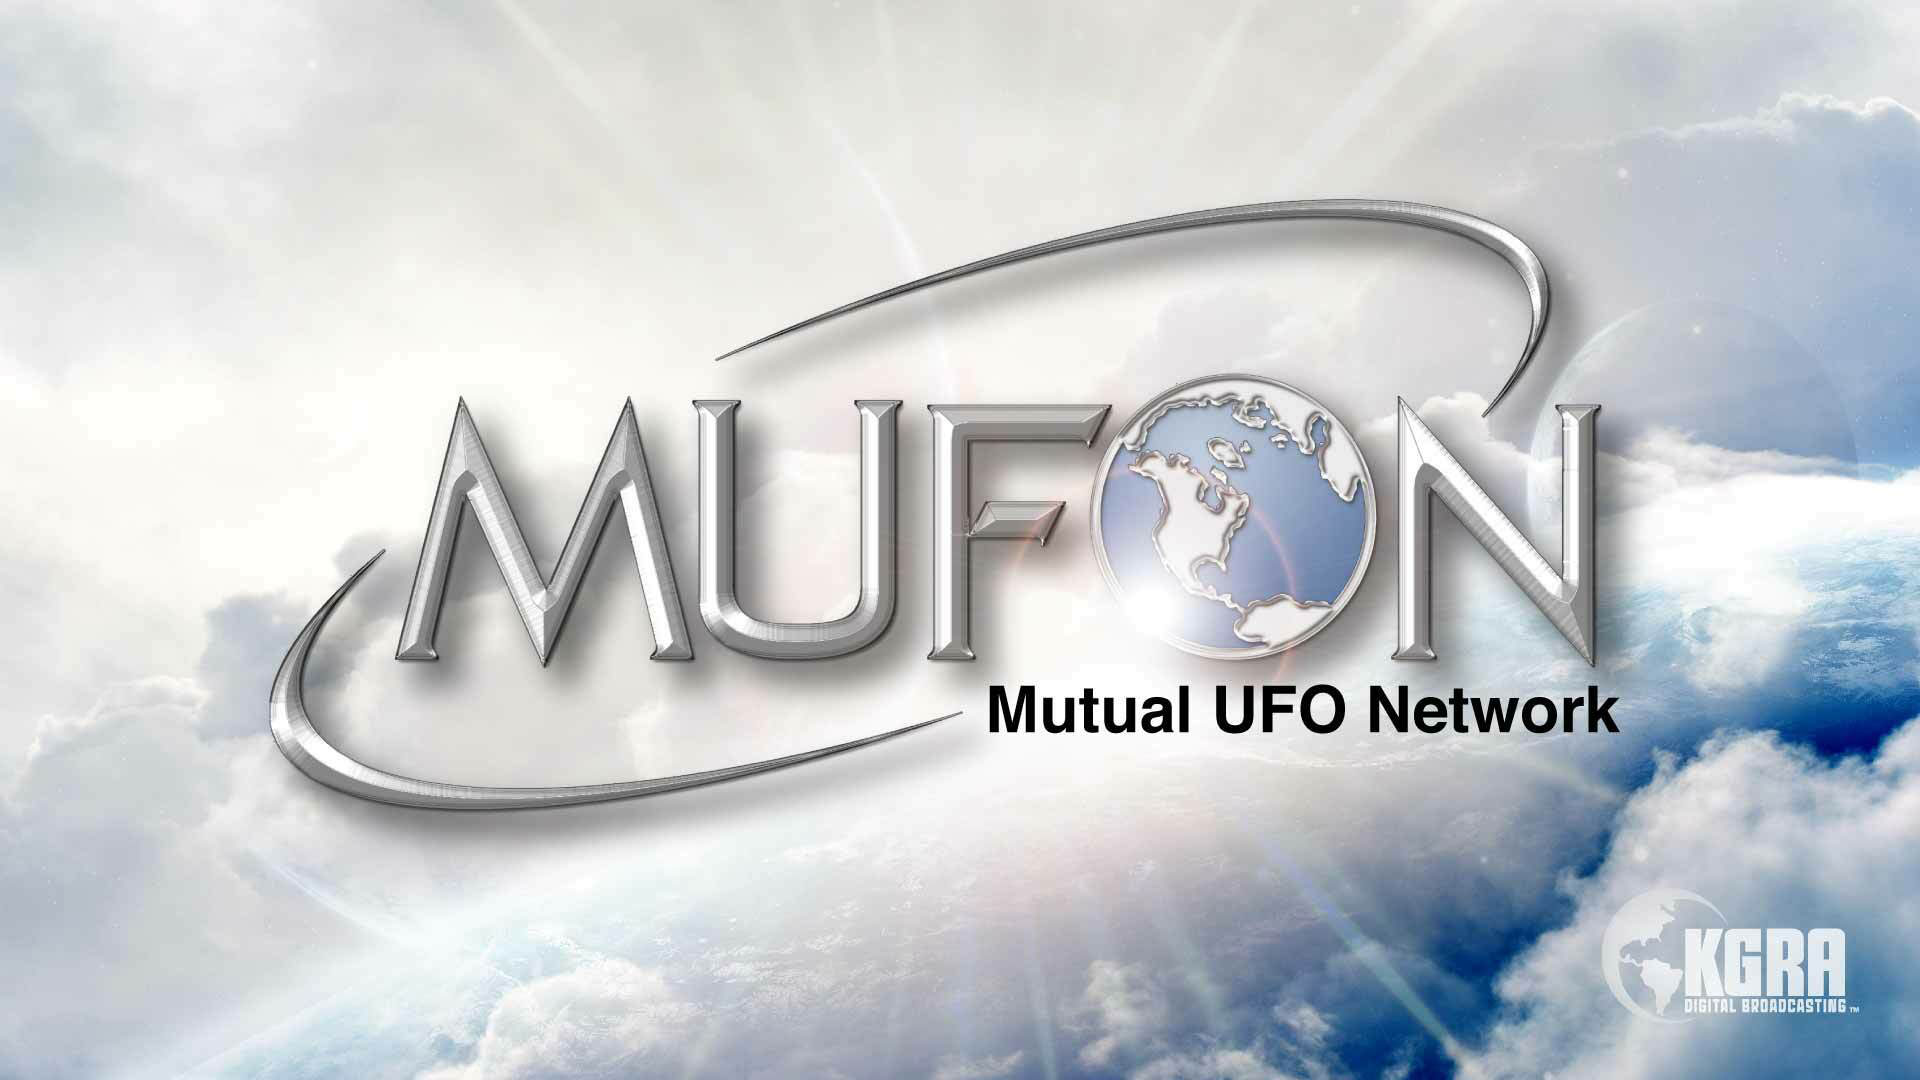 MUFON - KGRA Digital Broadcasting